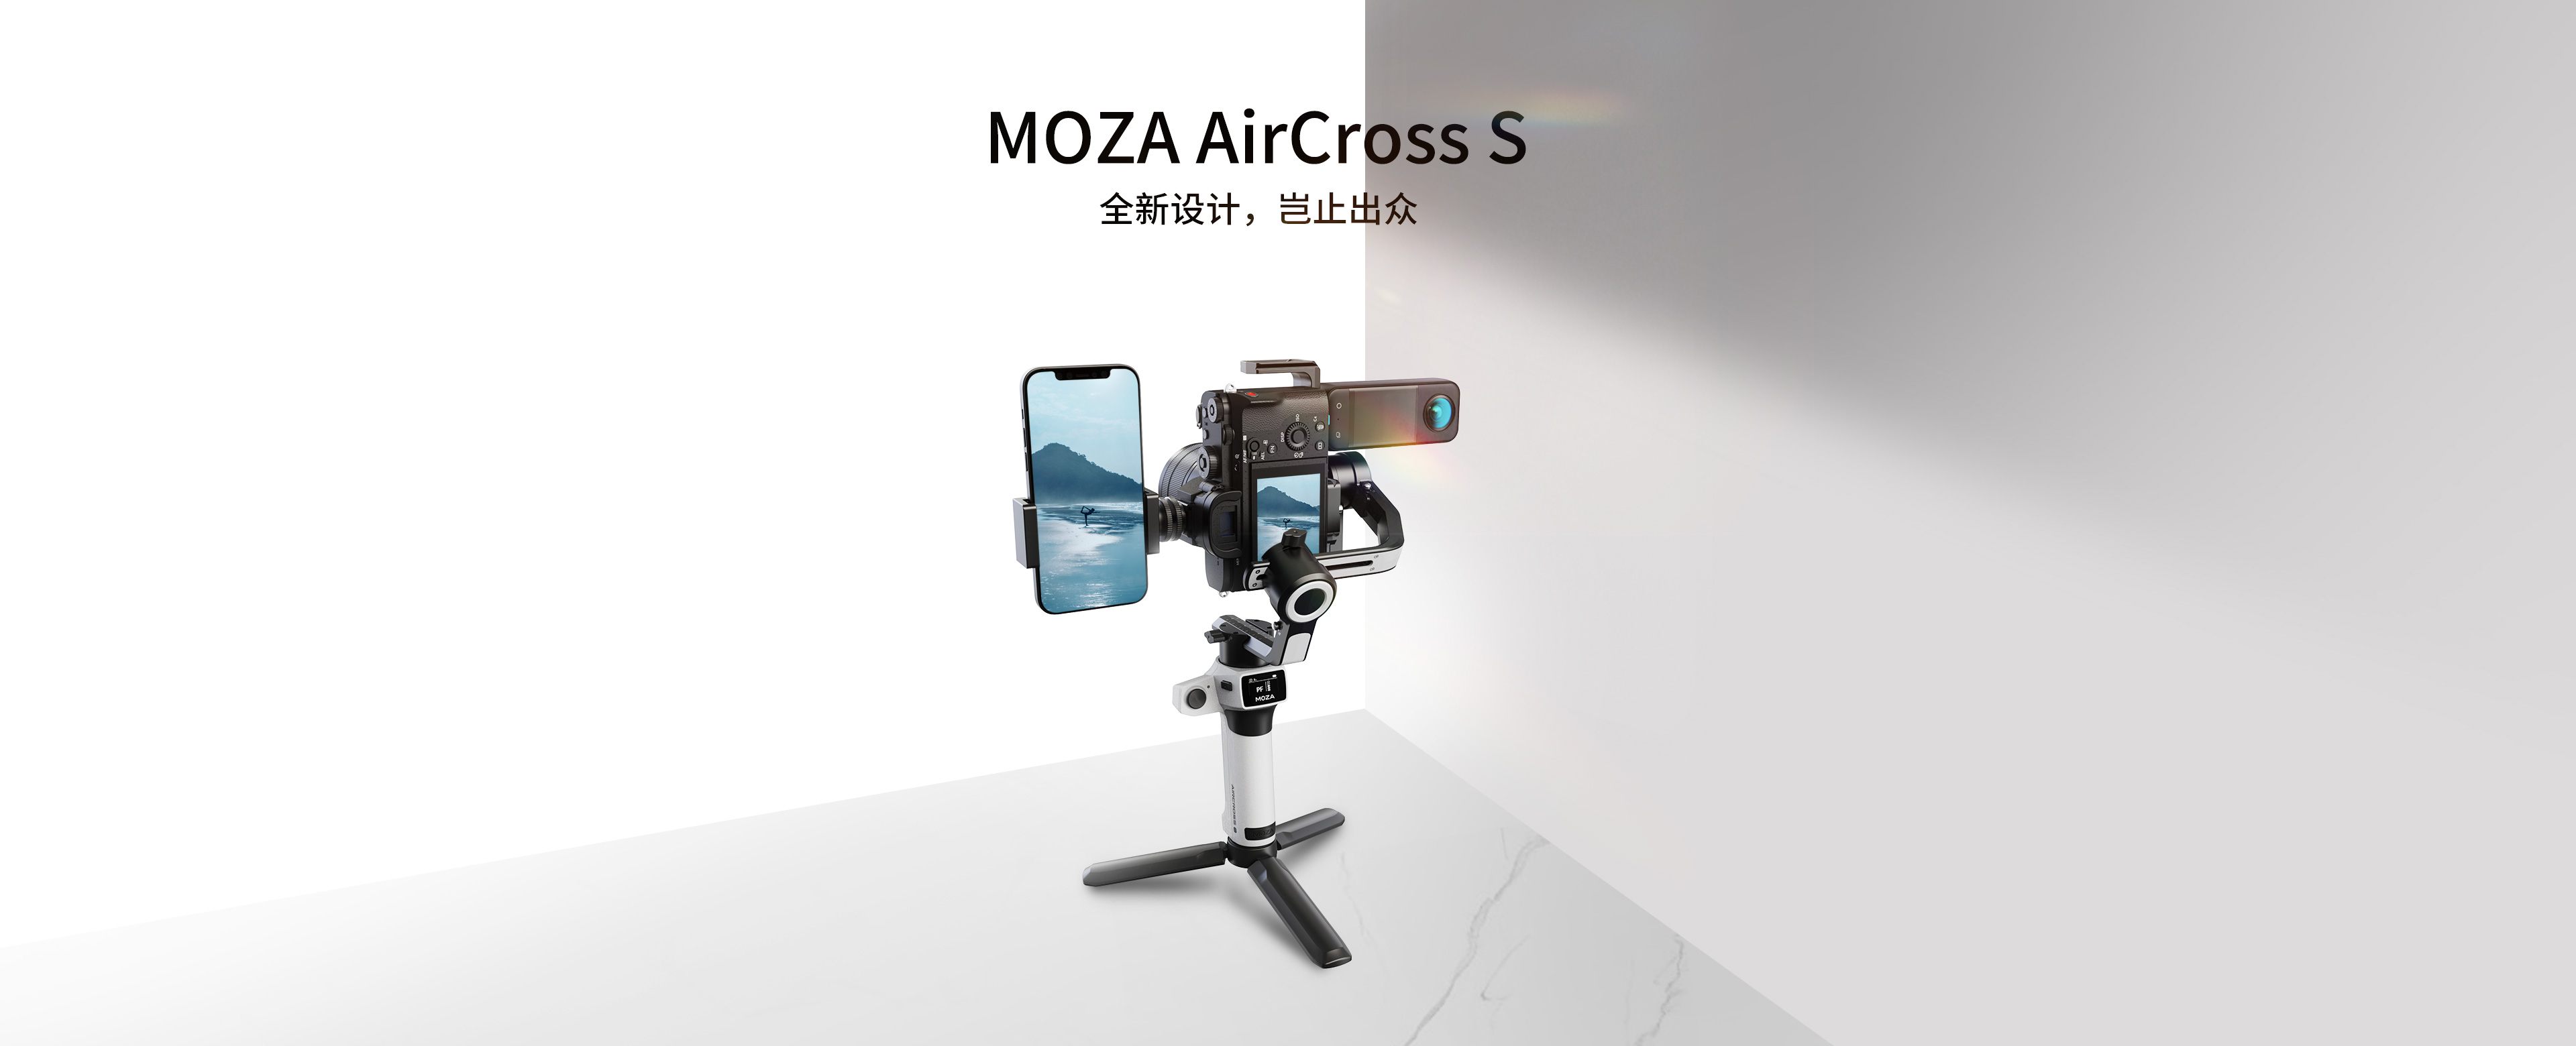 MOZA AirCross S